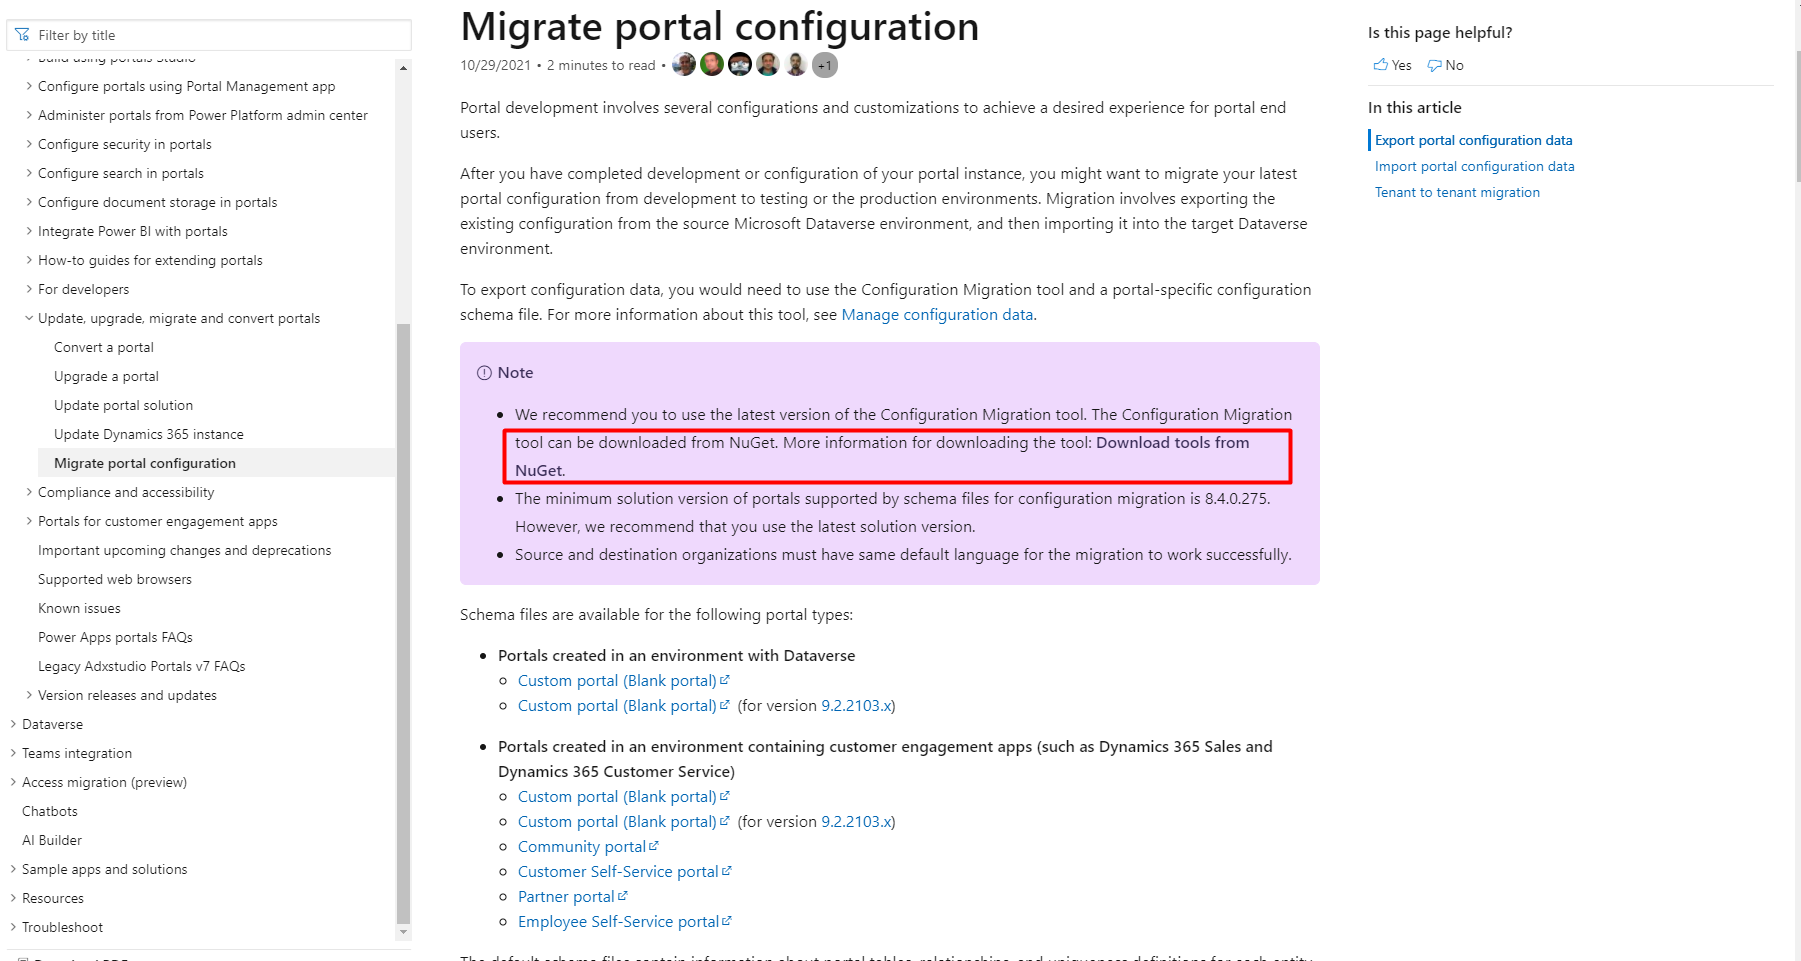 PortalMigration